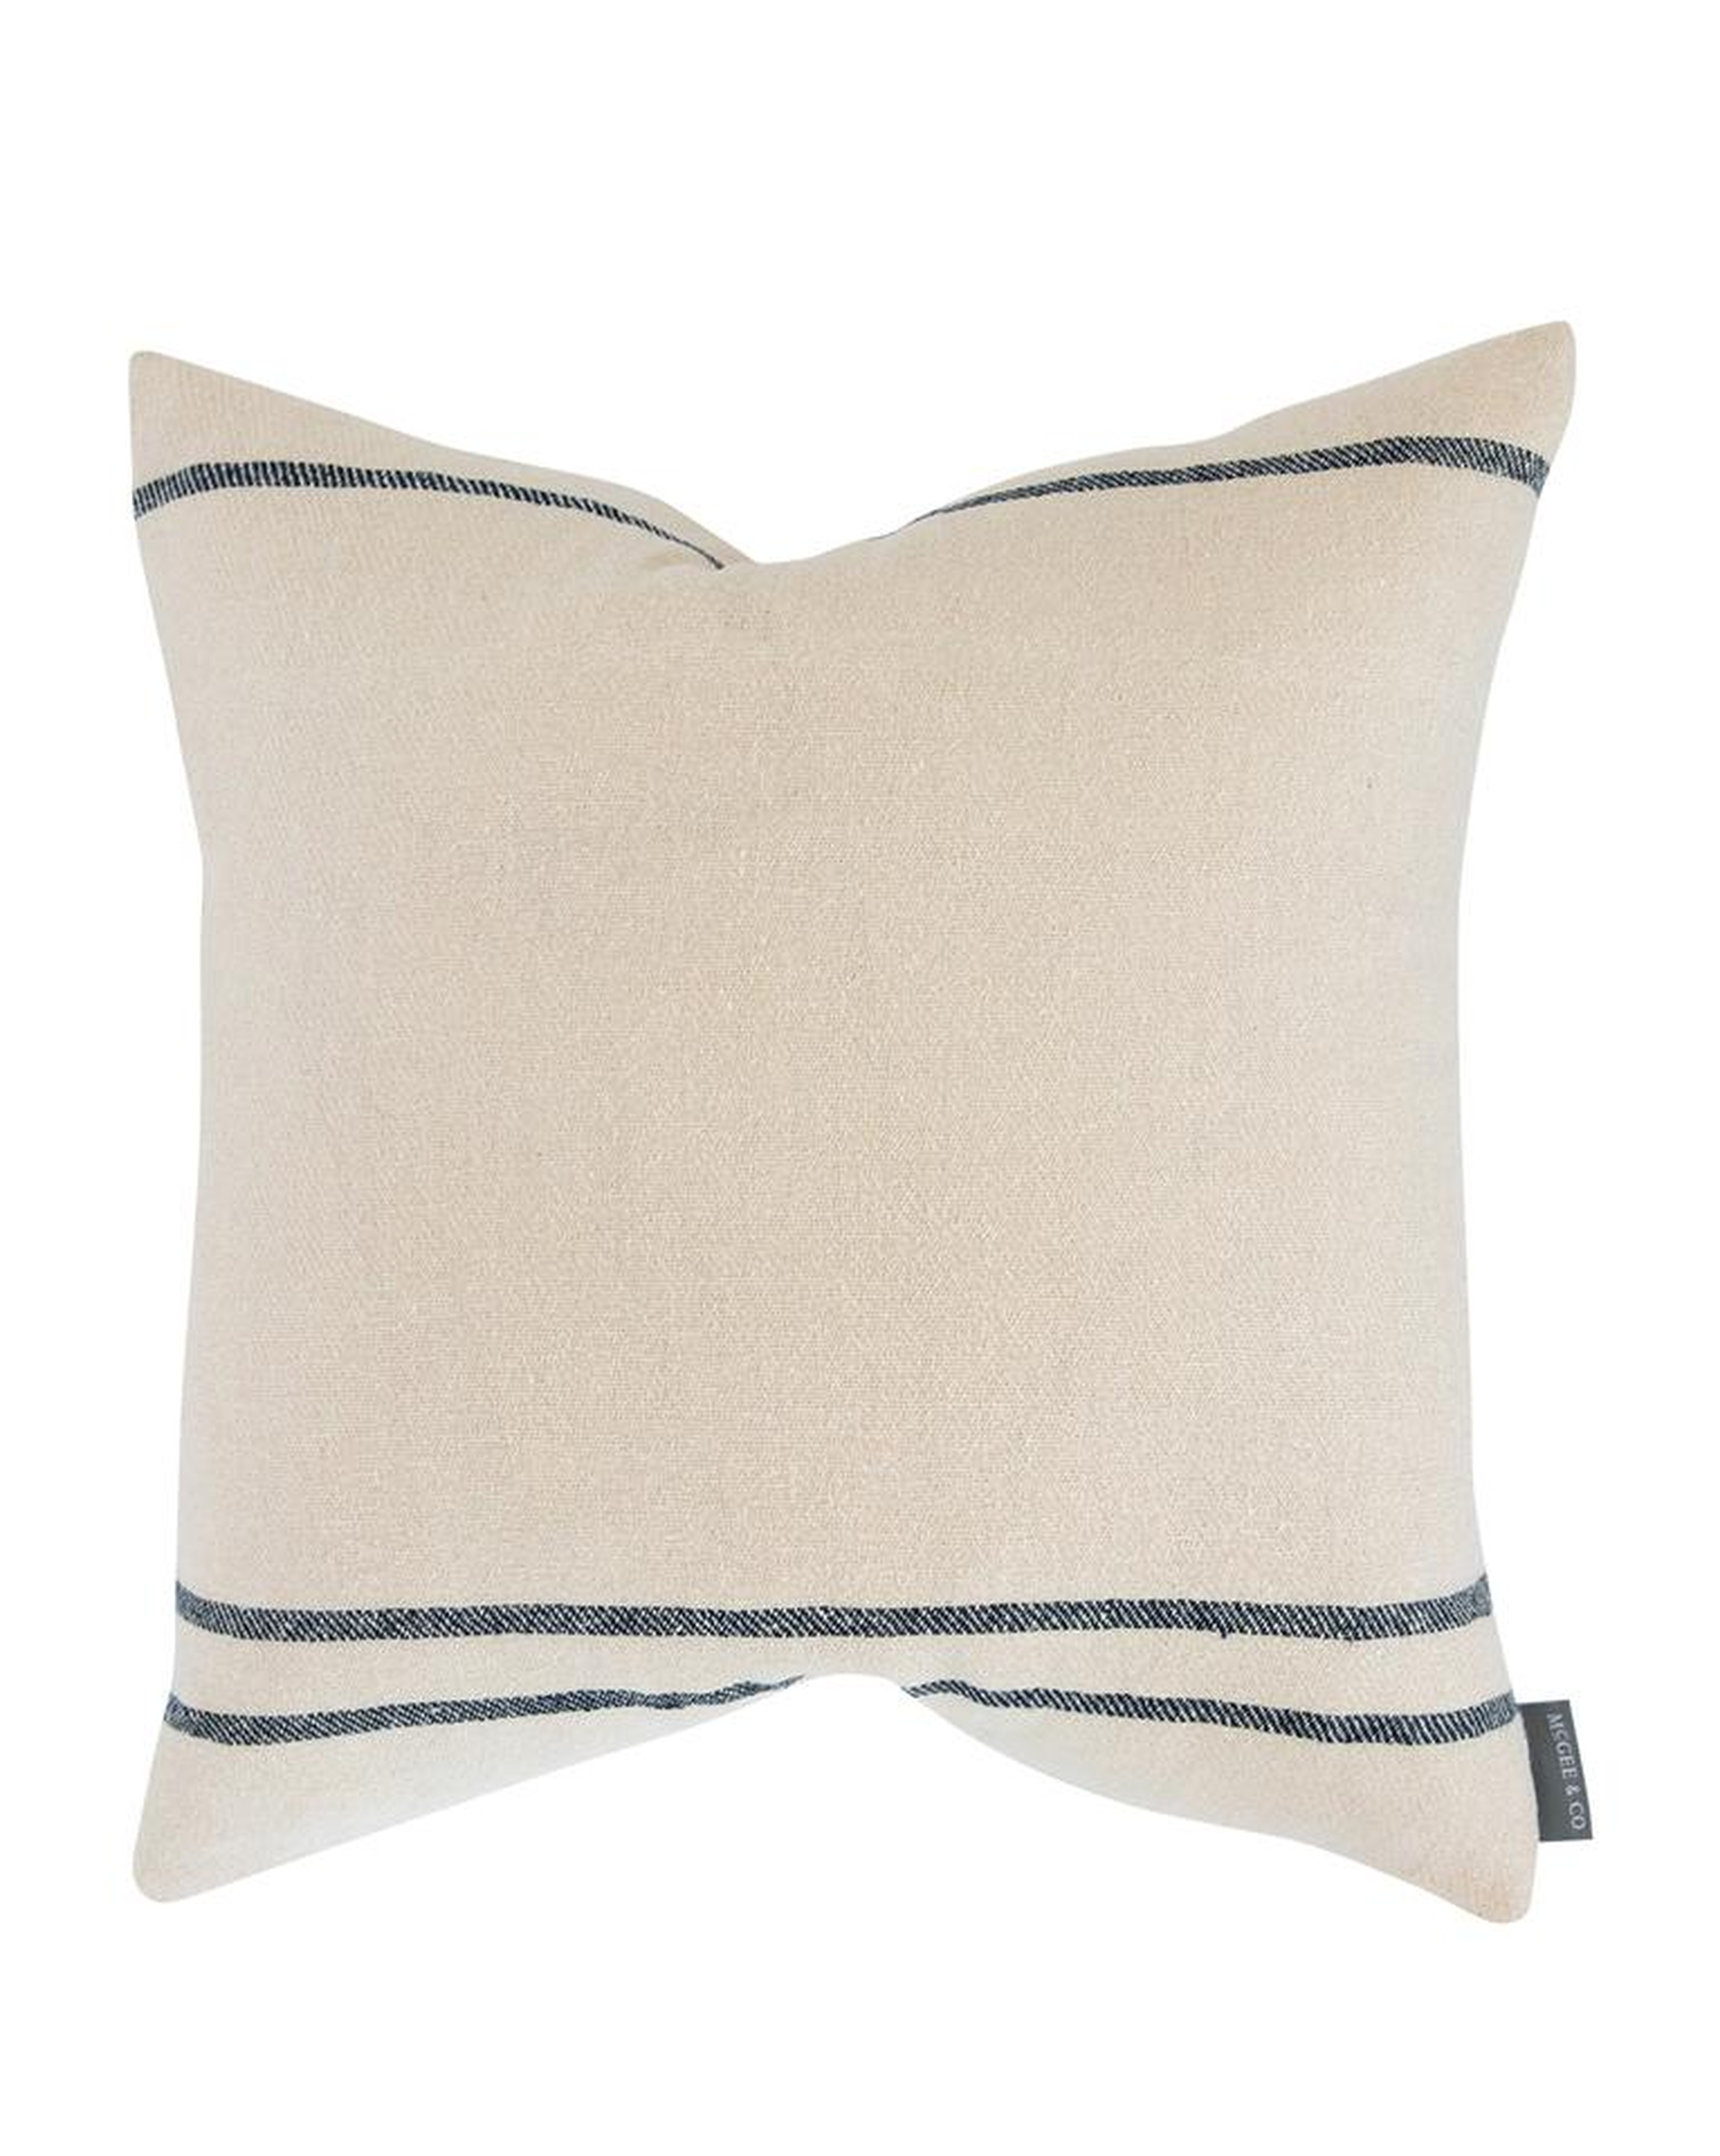 Abigail Silk Stripe Pillow Cover, Cream & Navy, 22" x 22" - McGee & Co.